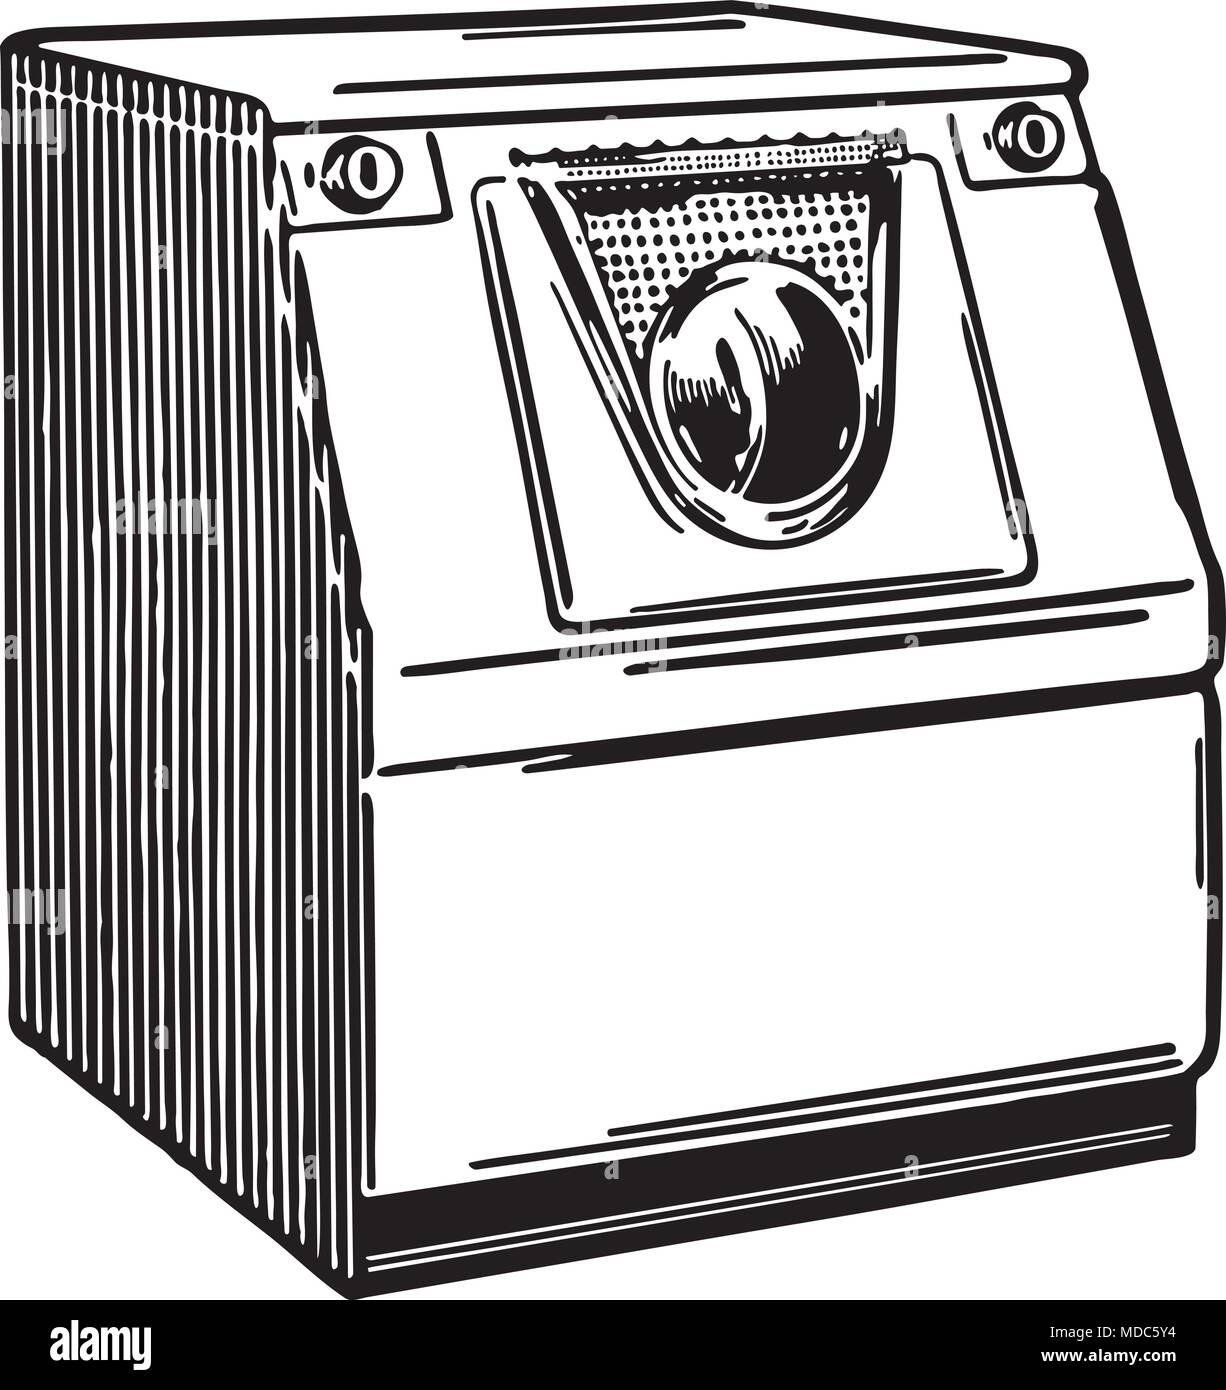 Automatic Washer 2 - Retro Ad Art Illustration Stock Vector